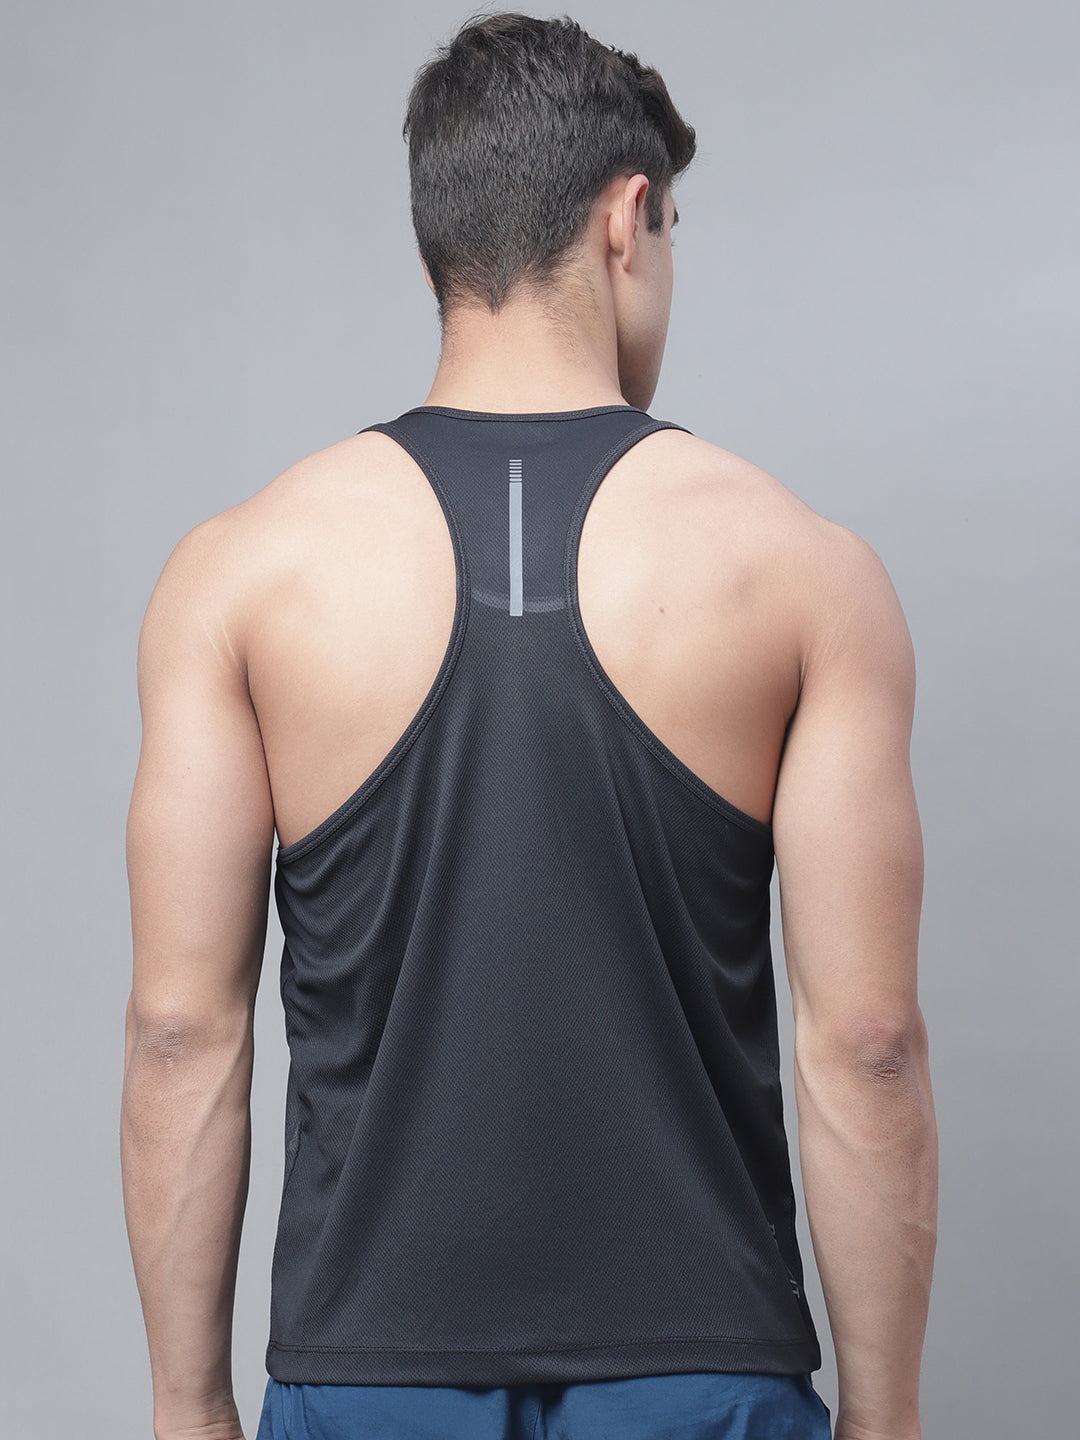 Men Sleeveless Anti-Odor Technology Dry Fit Sports Gym Vest - Friskers